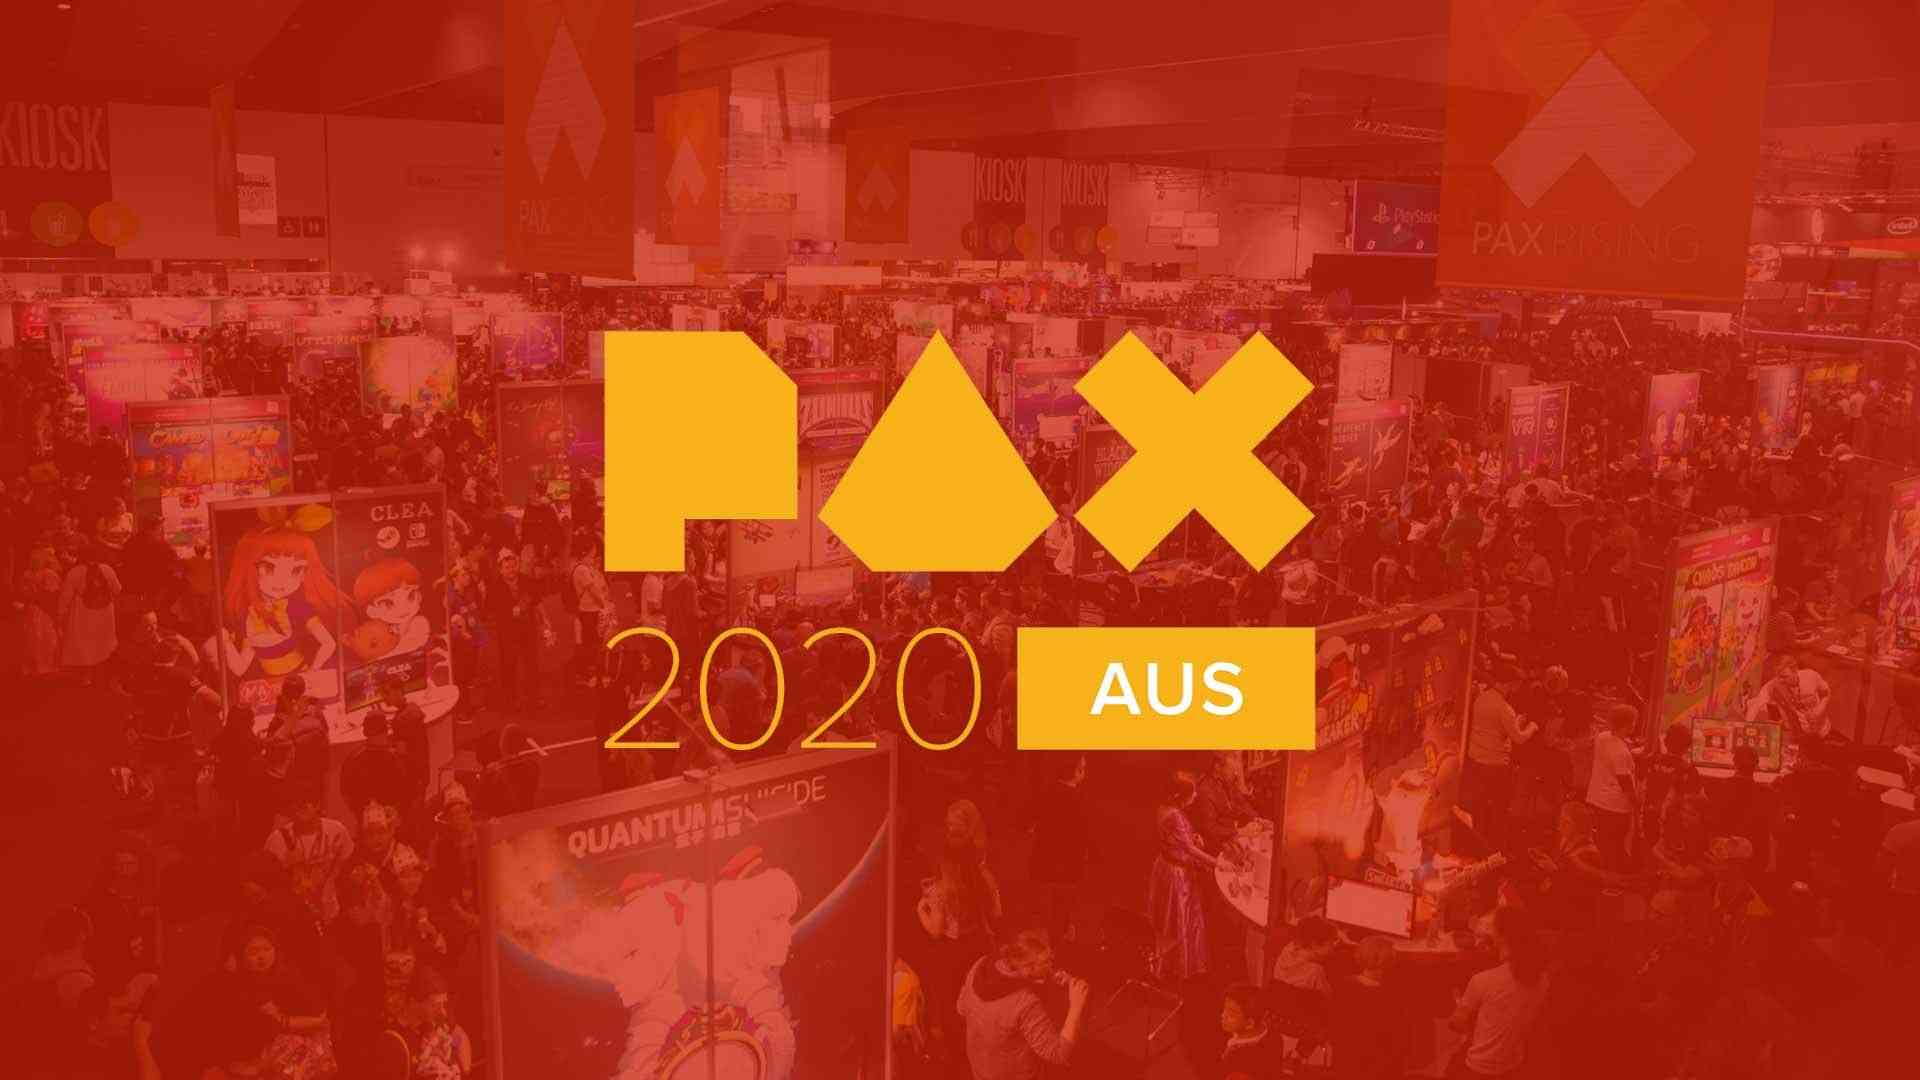 pax australia 2020 cancelled 4315 big 1